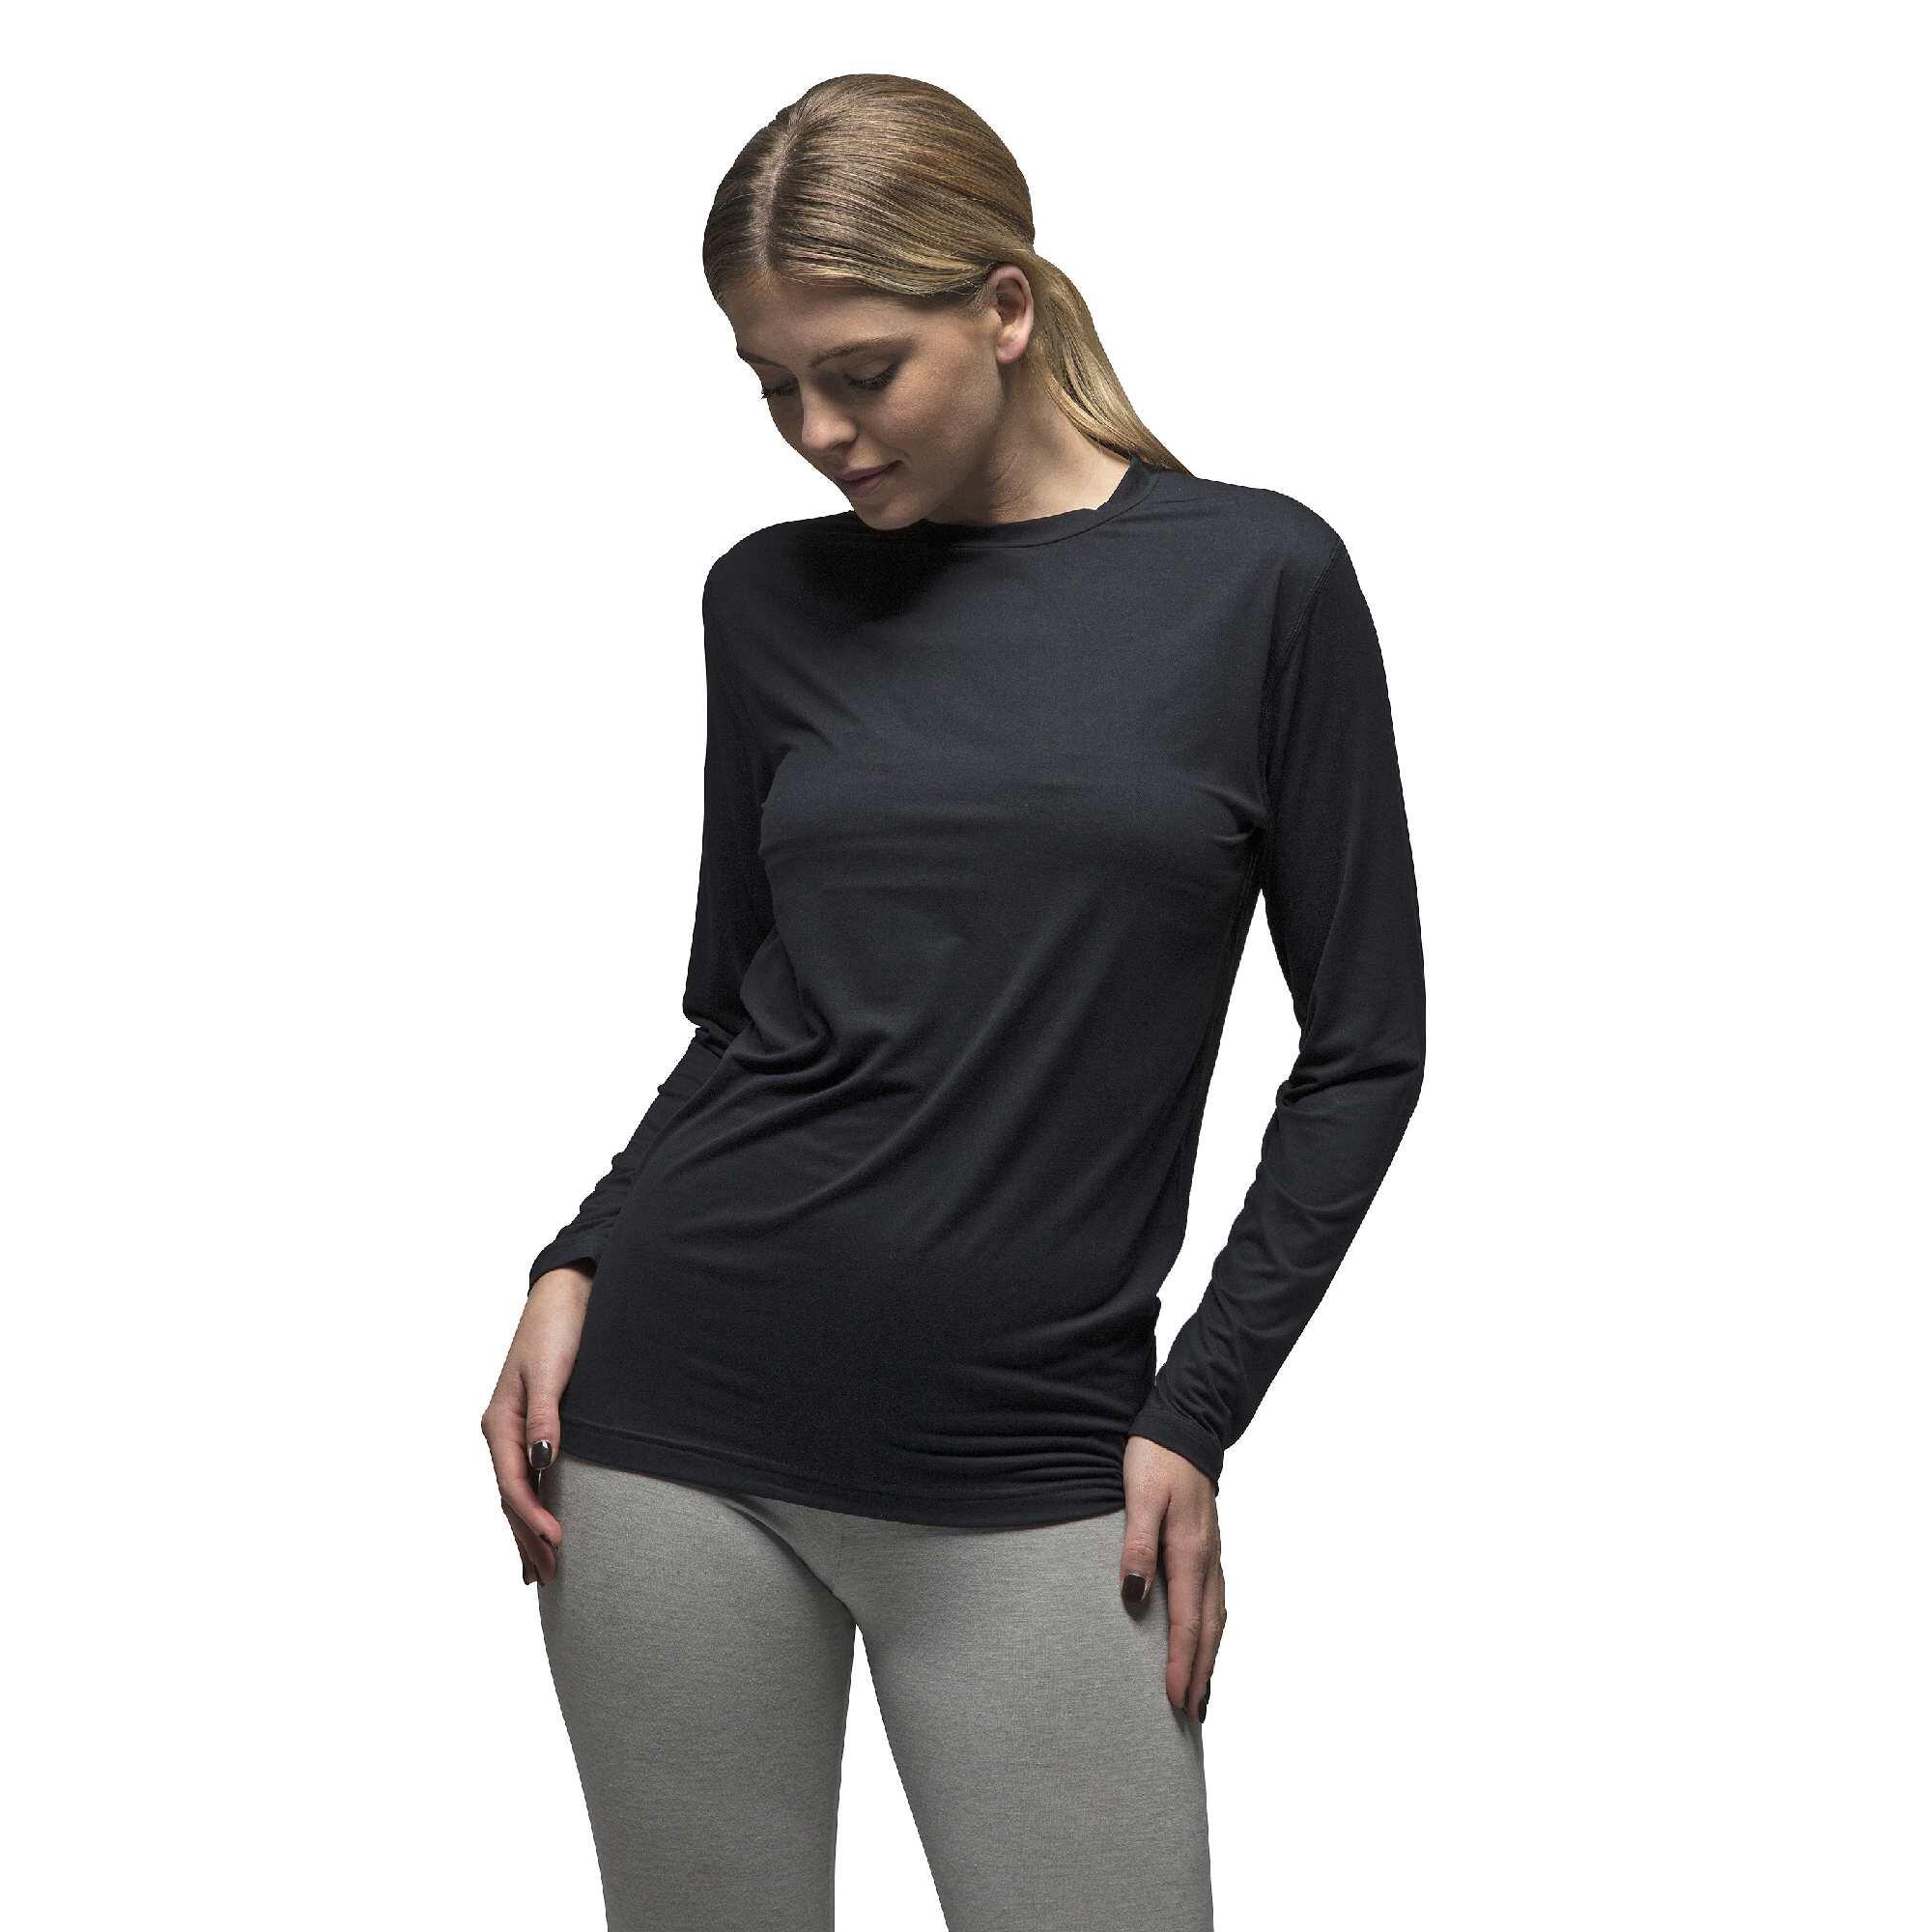 Women's Basic Long Sleeve Thermal Tops Lightweight T-Shirts Slim